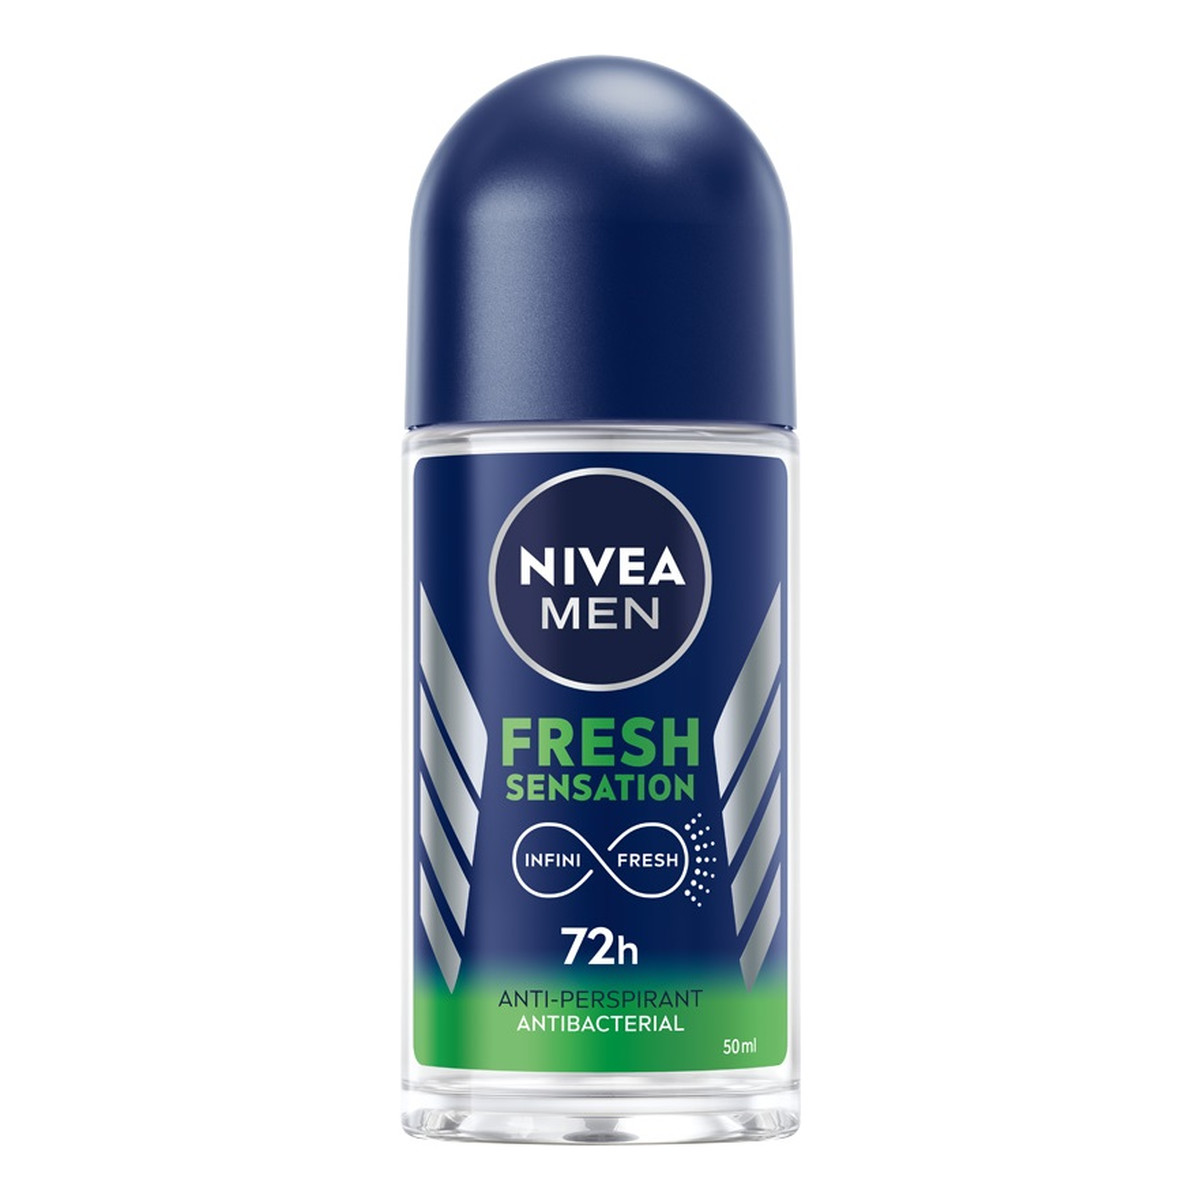 Nivea Men fresh sensation antyperspirant w kulce 50ml